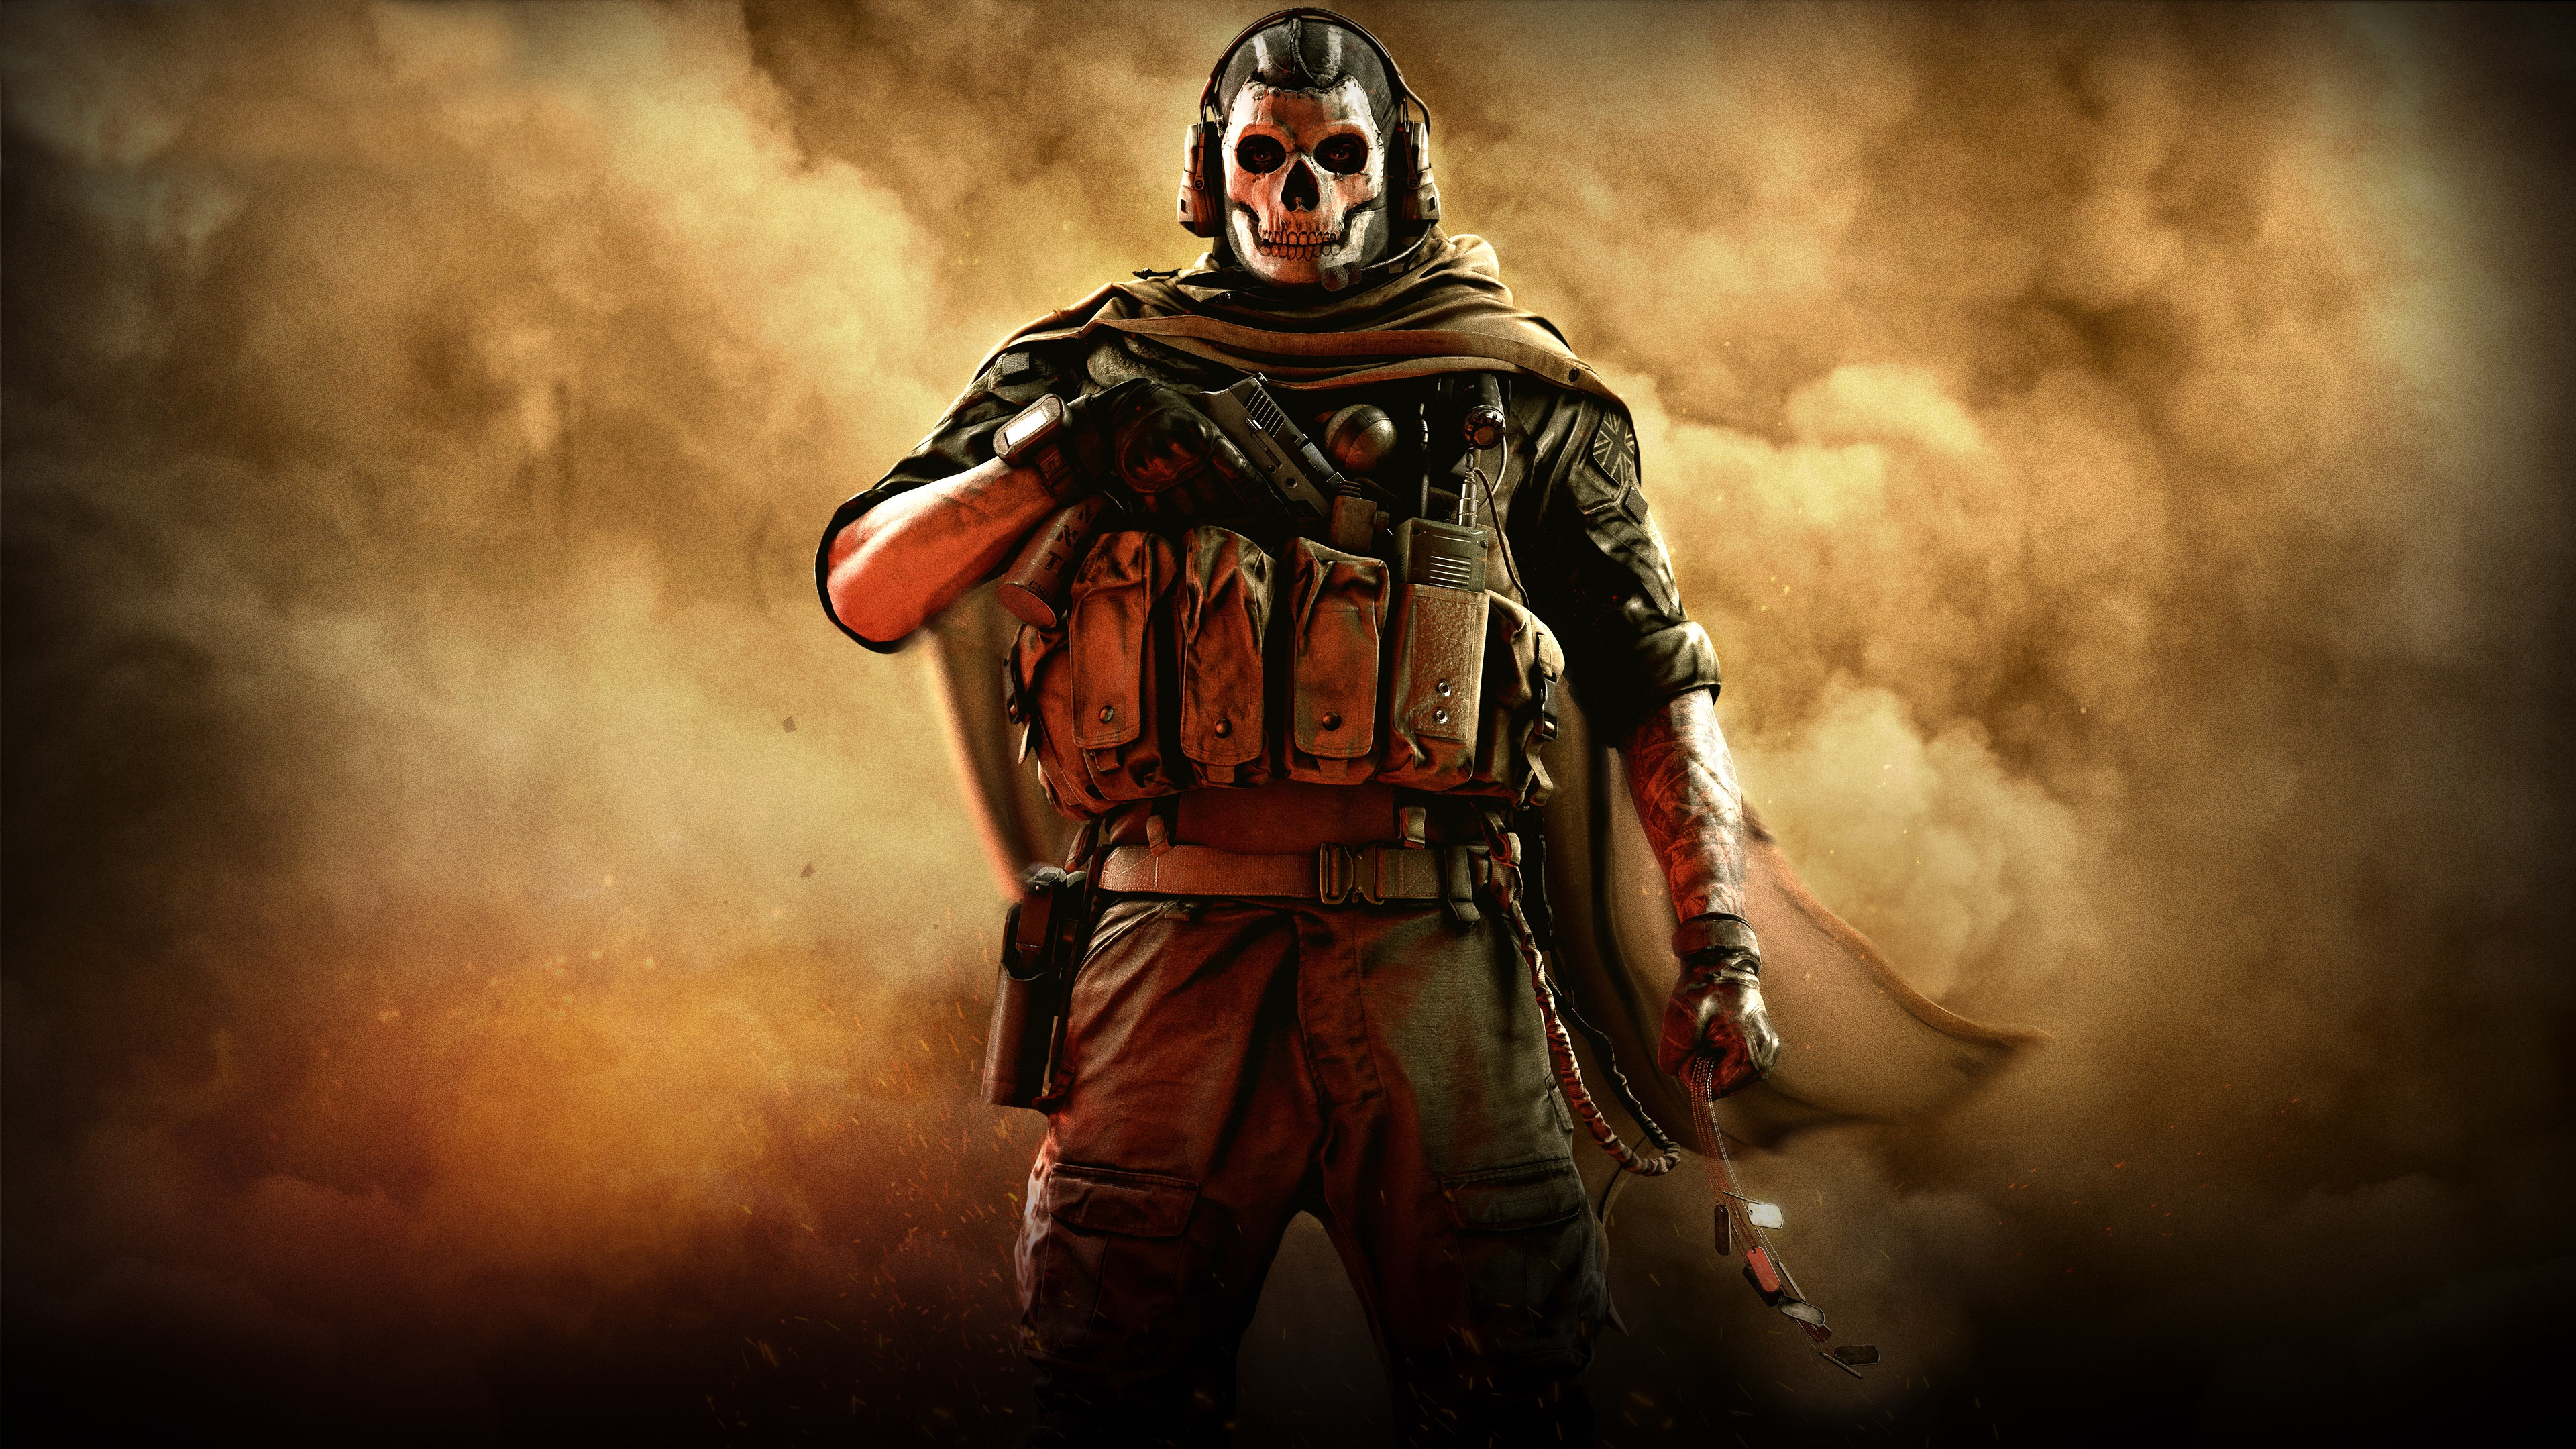 CoD Modern Warfare Poster Wallpaper, HD Games 4K Wallpapers, Images